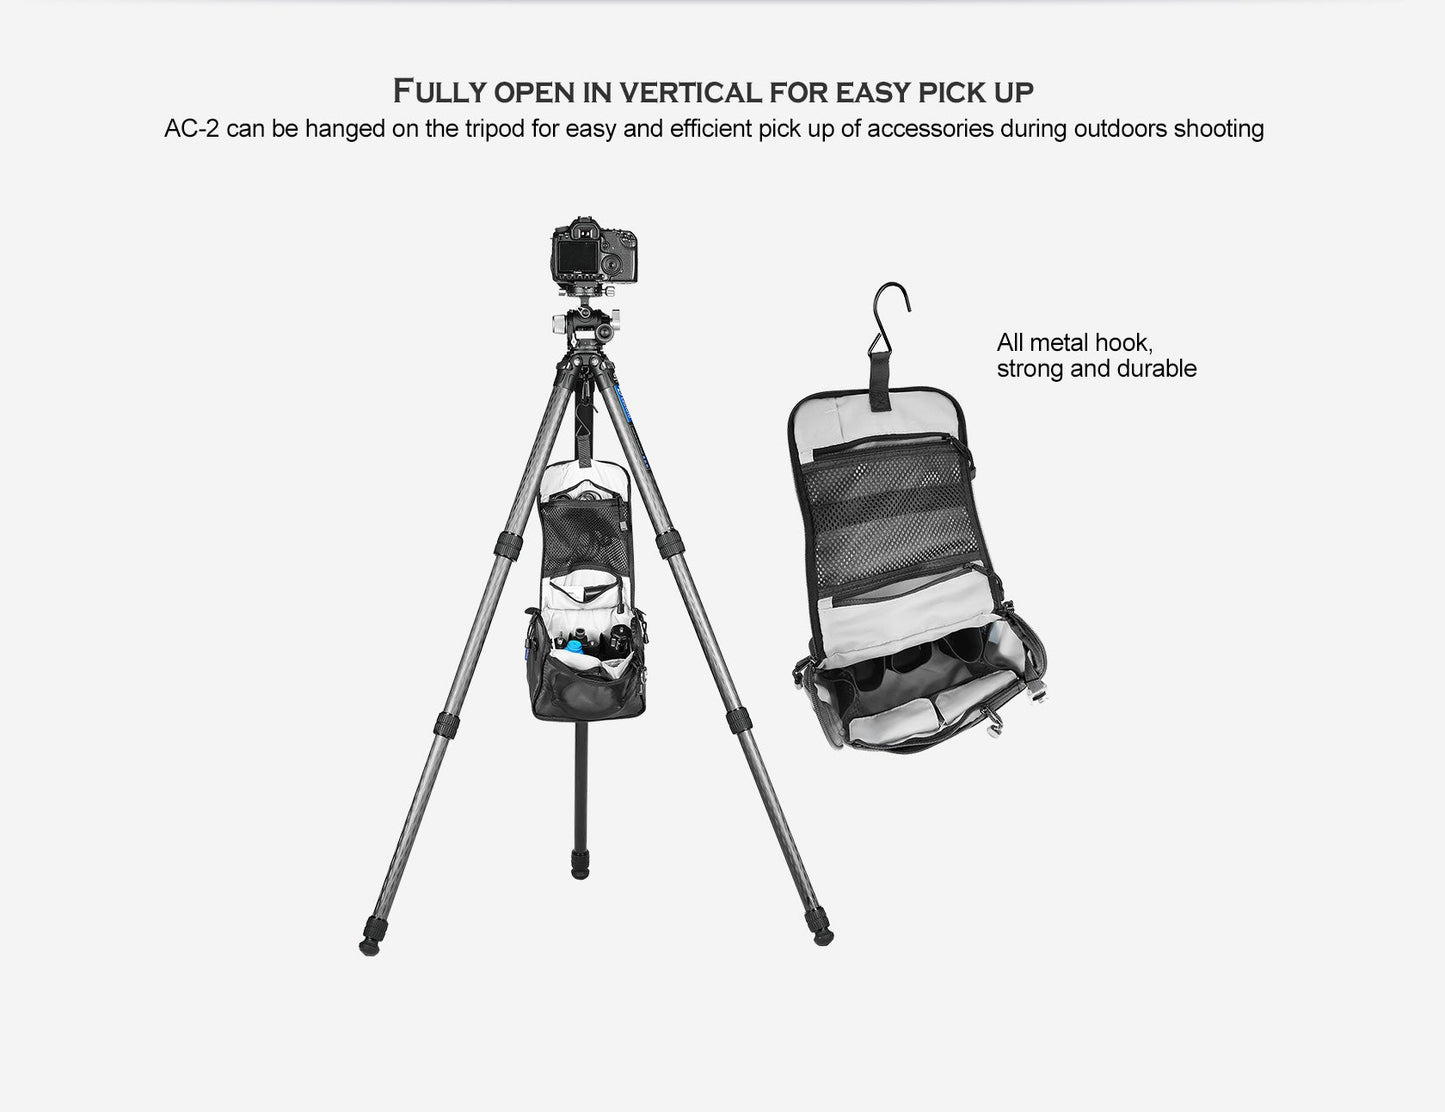 
                  
                    Leofoto AC-2 Multi-functional Camera Messenger Waterproof Bag
                  
                